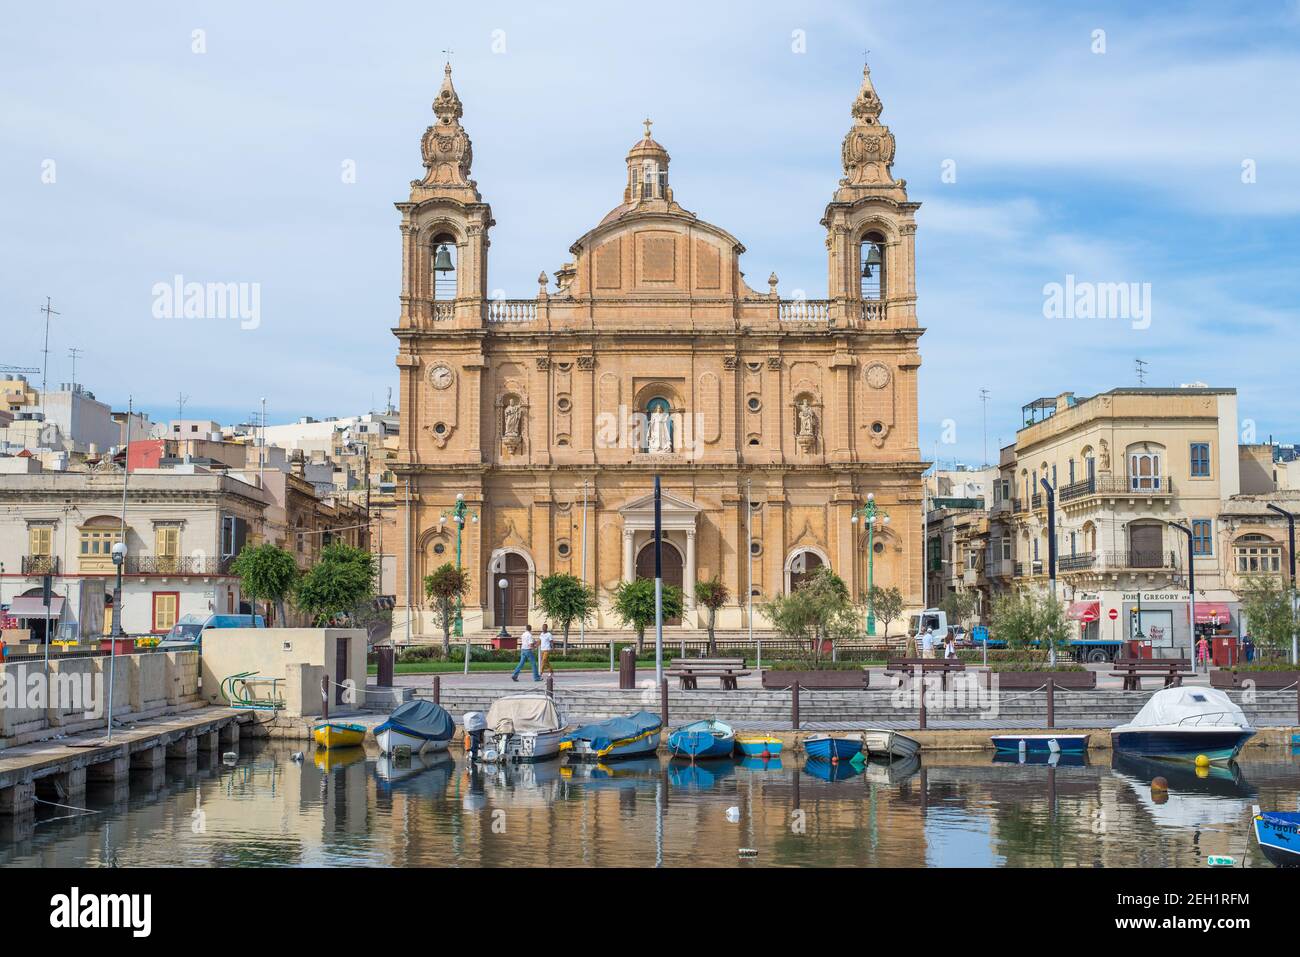 The Parish church of Saint Joseph in Msida, Malta Stock Photo